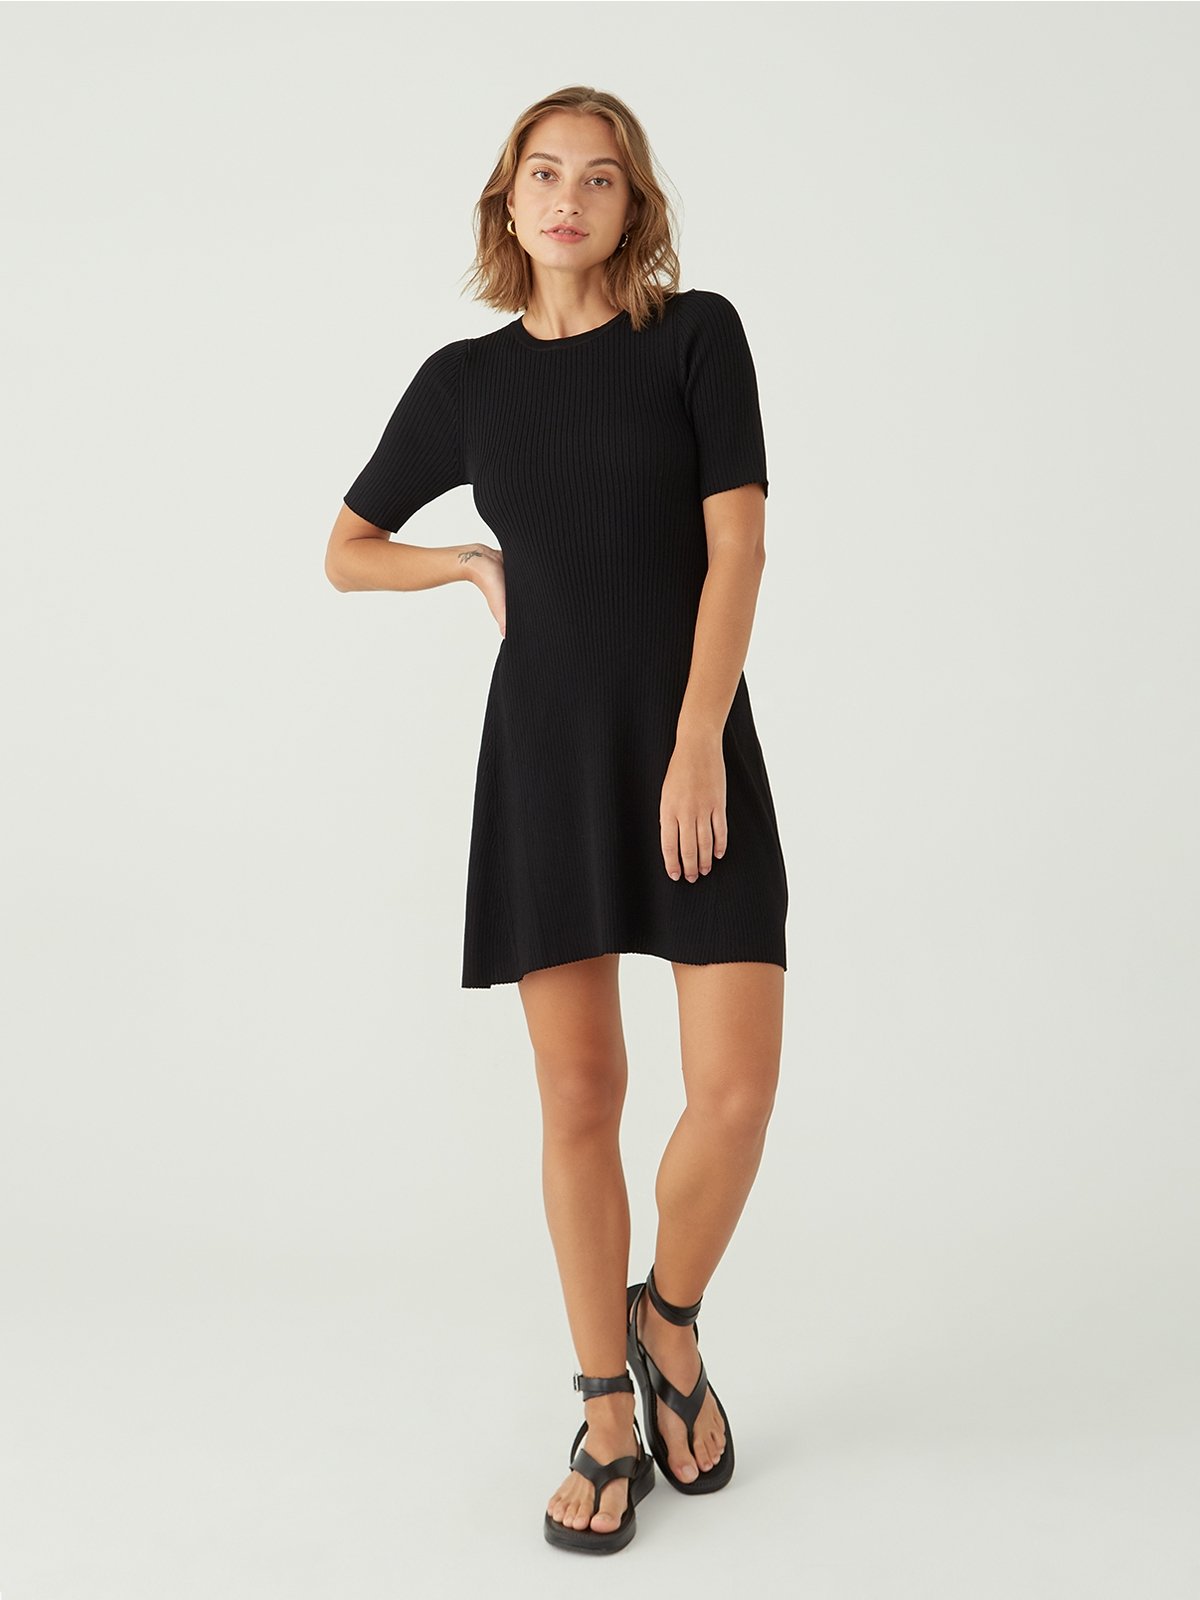 Flare Short Sleeve Knit Dress - Black - Pomelo Fashion